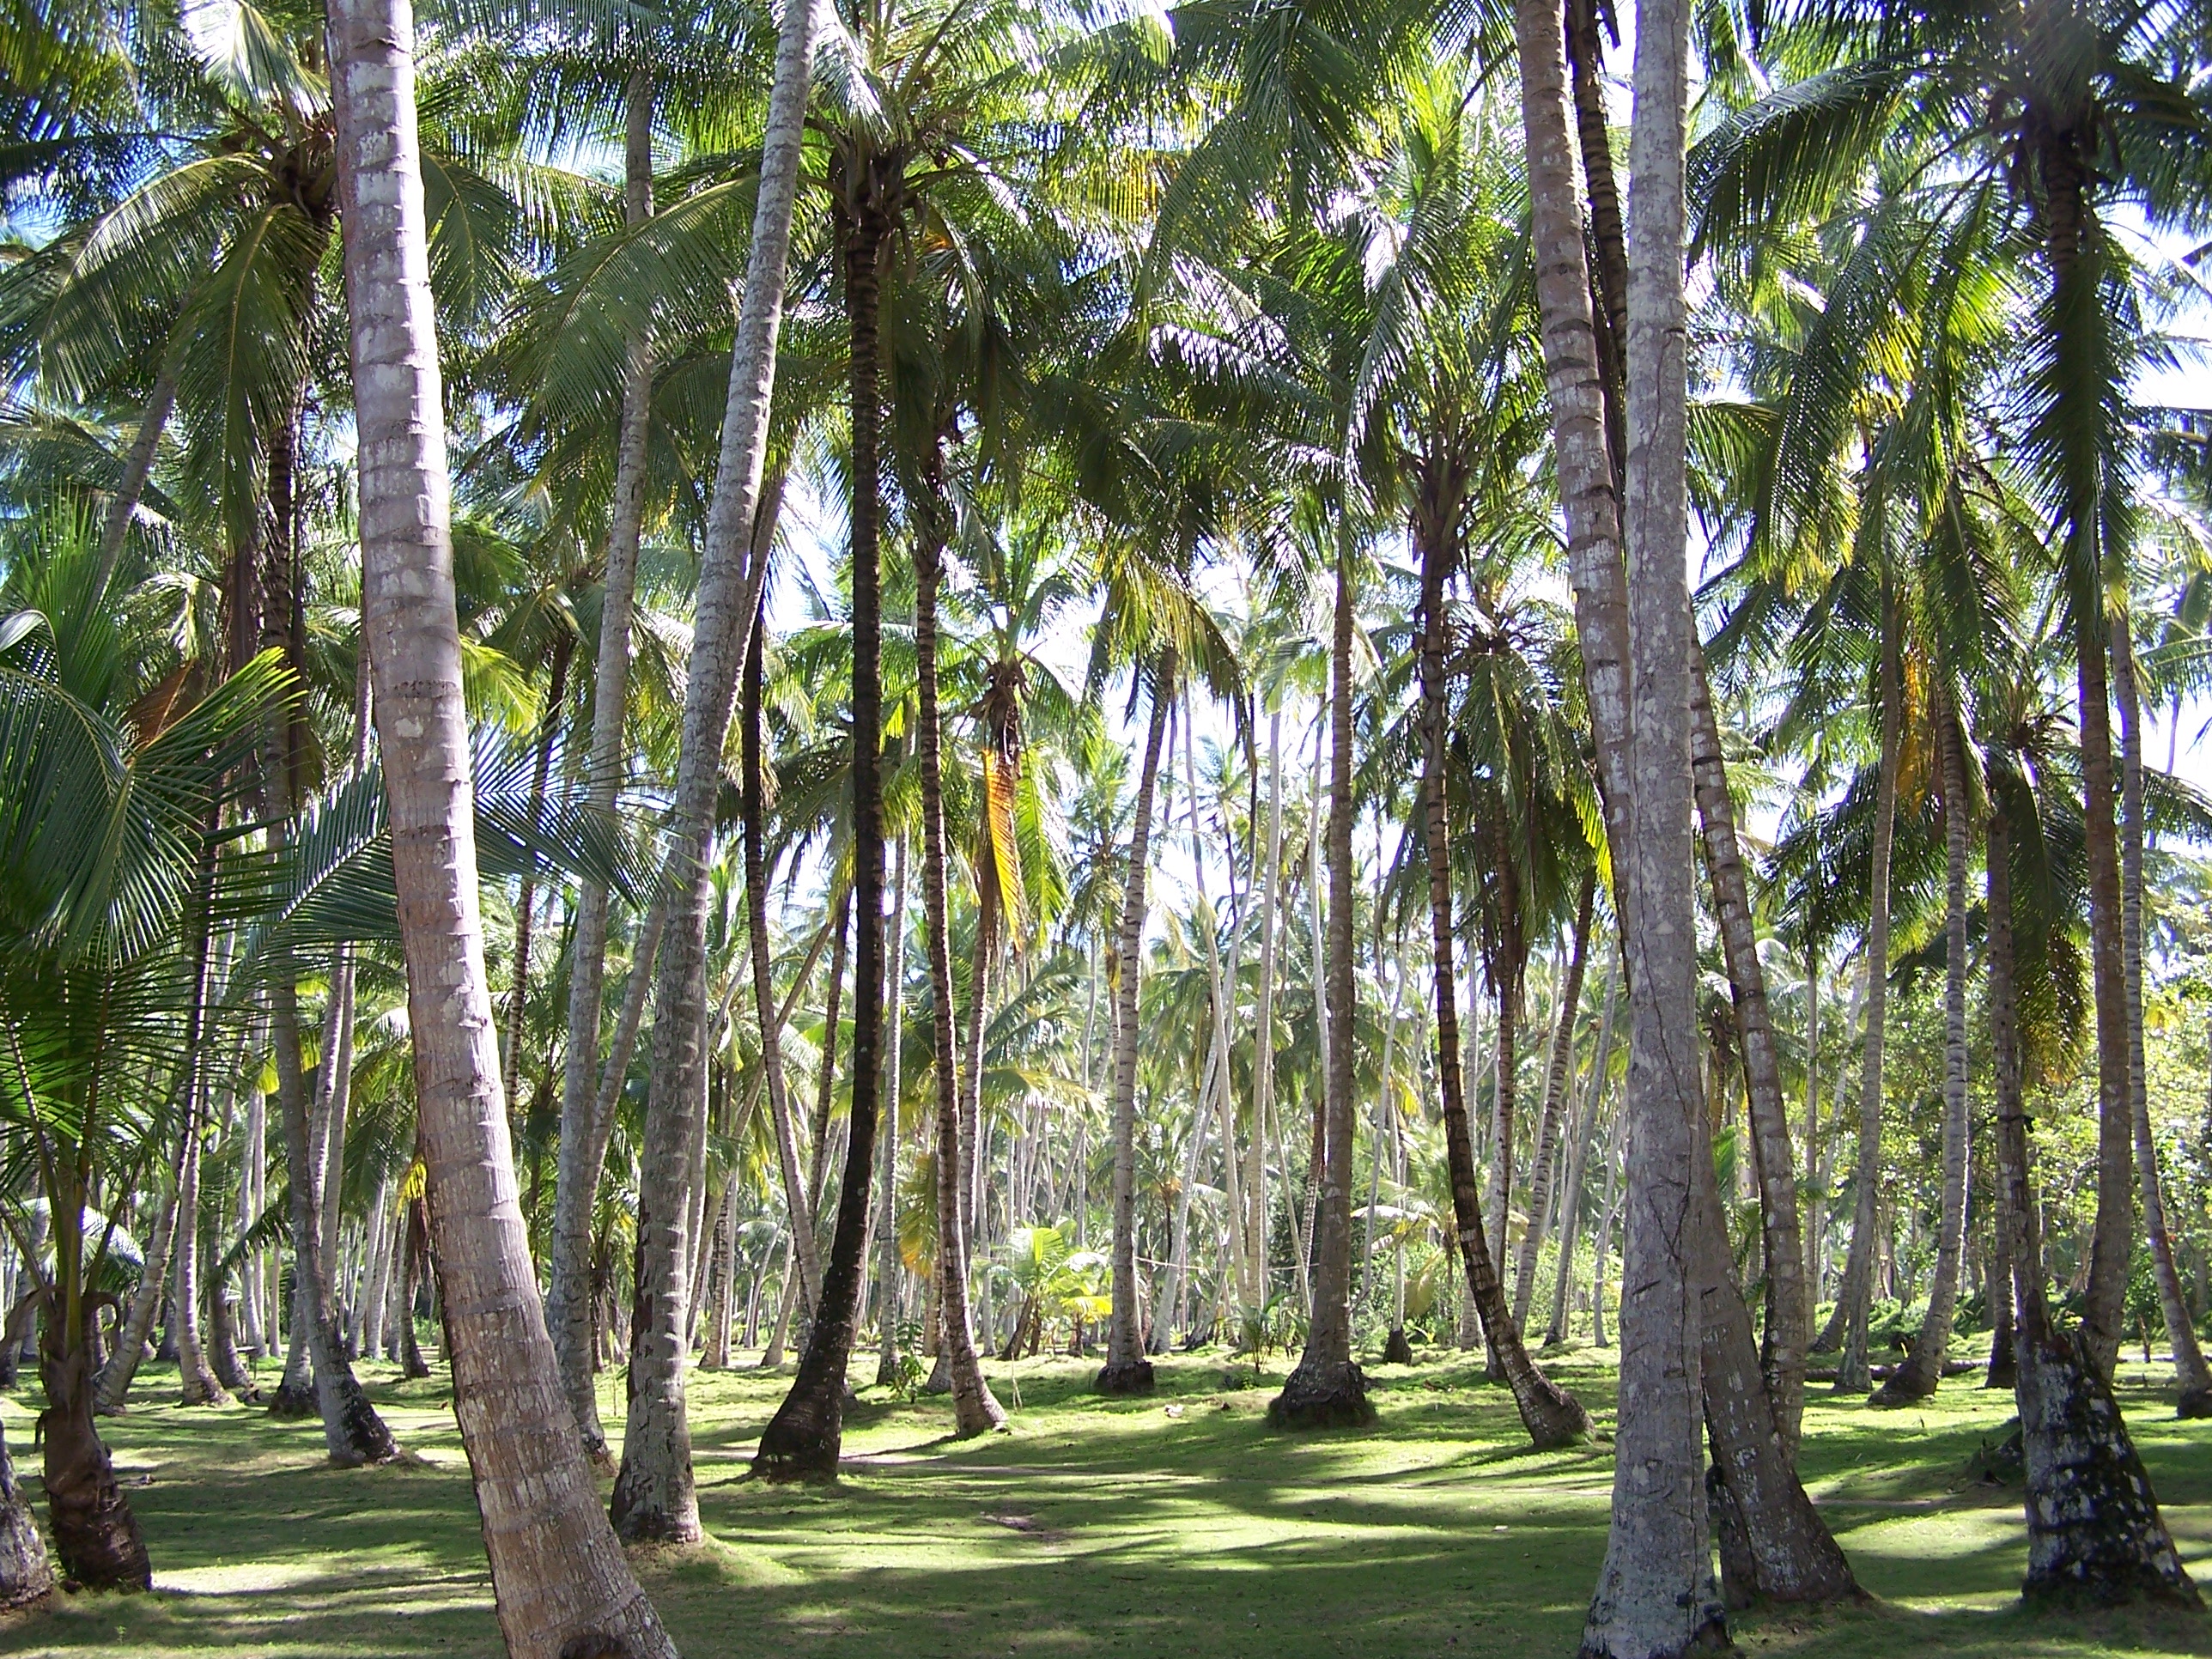 Palm Trees from Venezuela